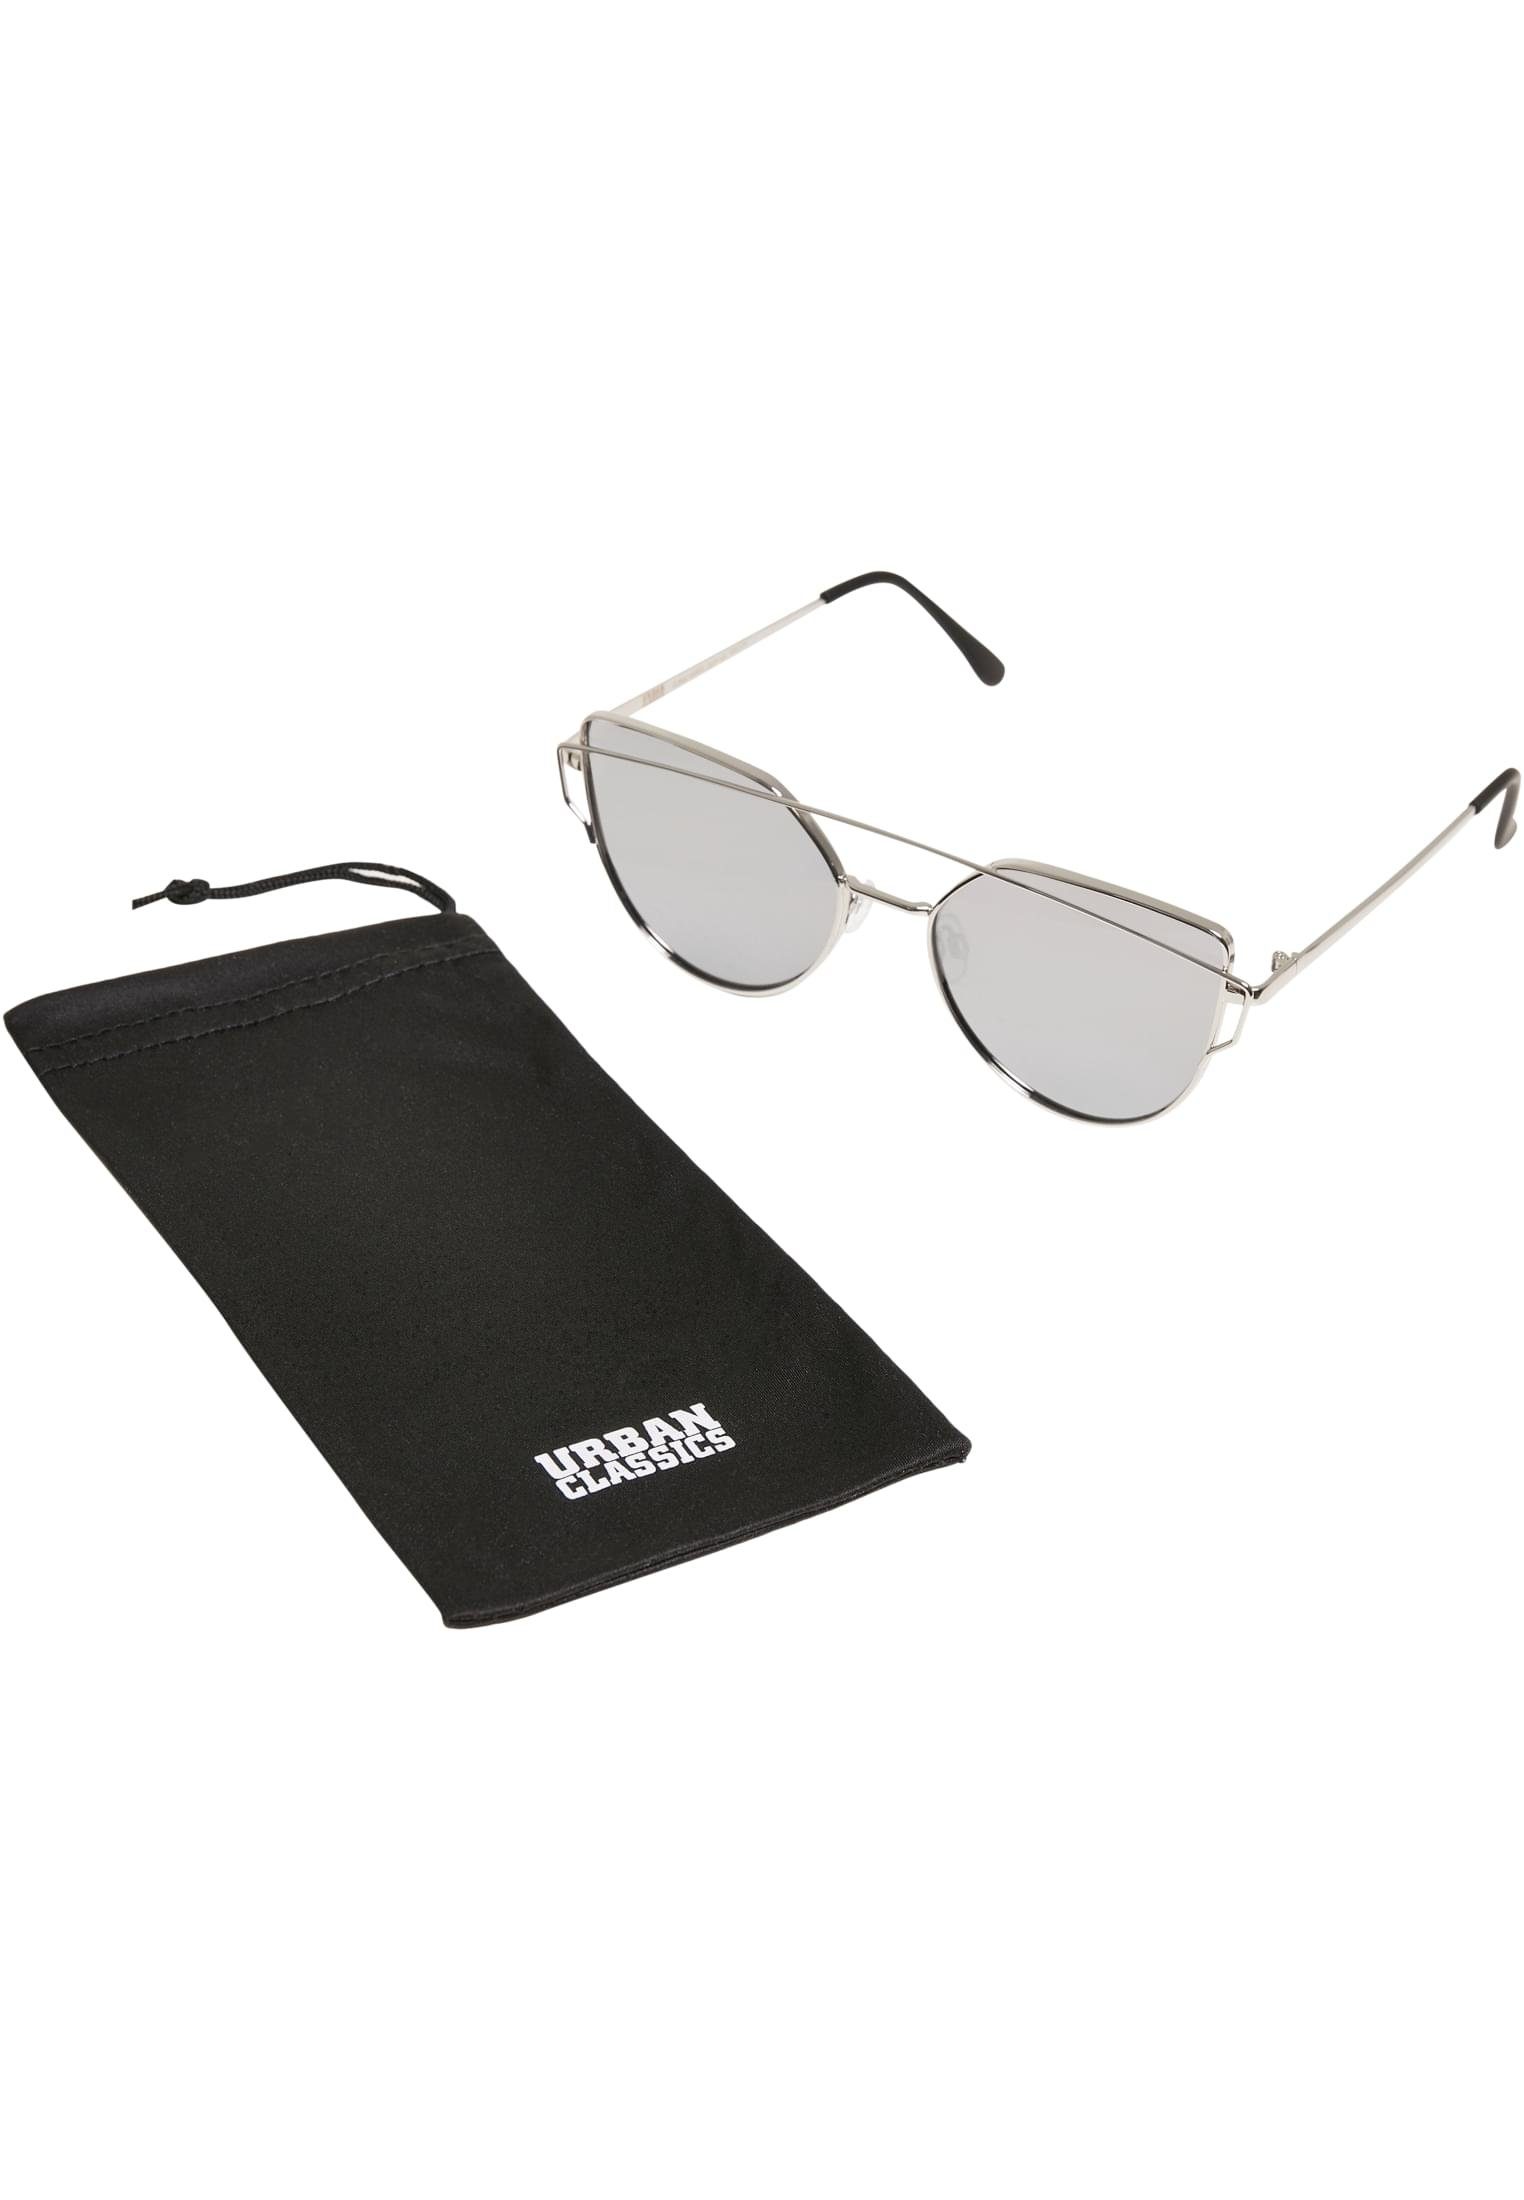 CLASSICS July Sonnenbrille silver UC URBAN Accessoires Sunglasses